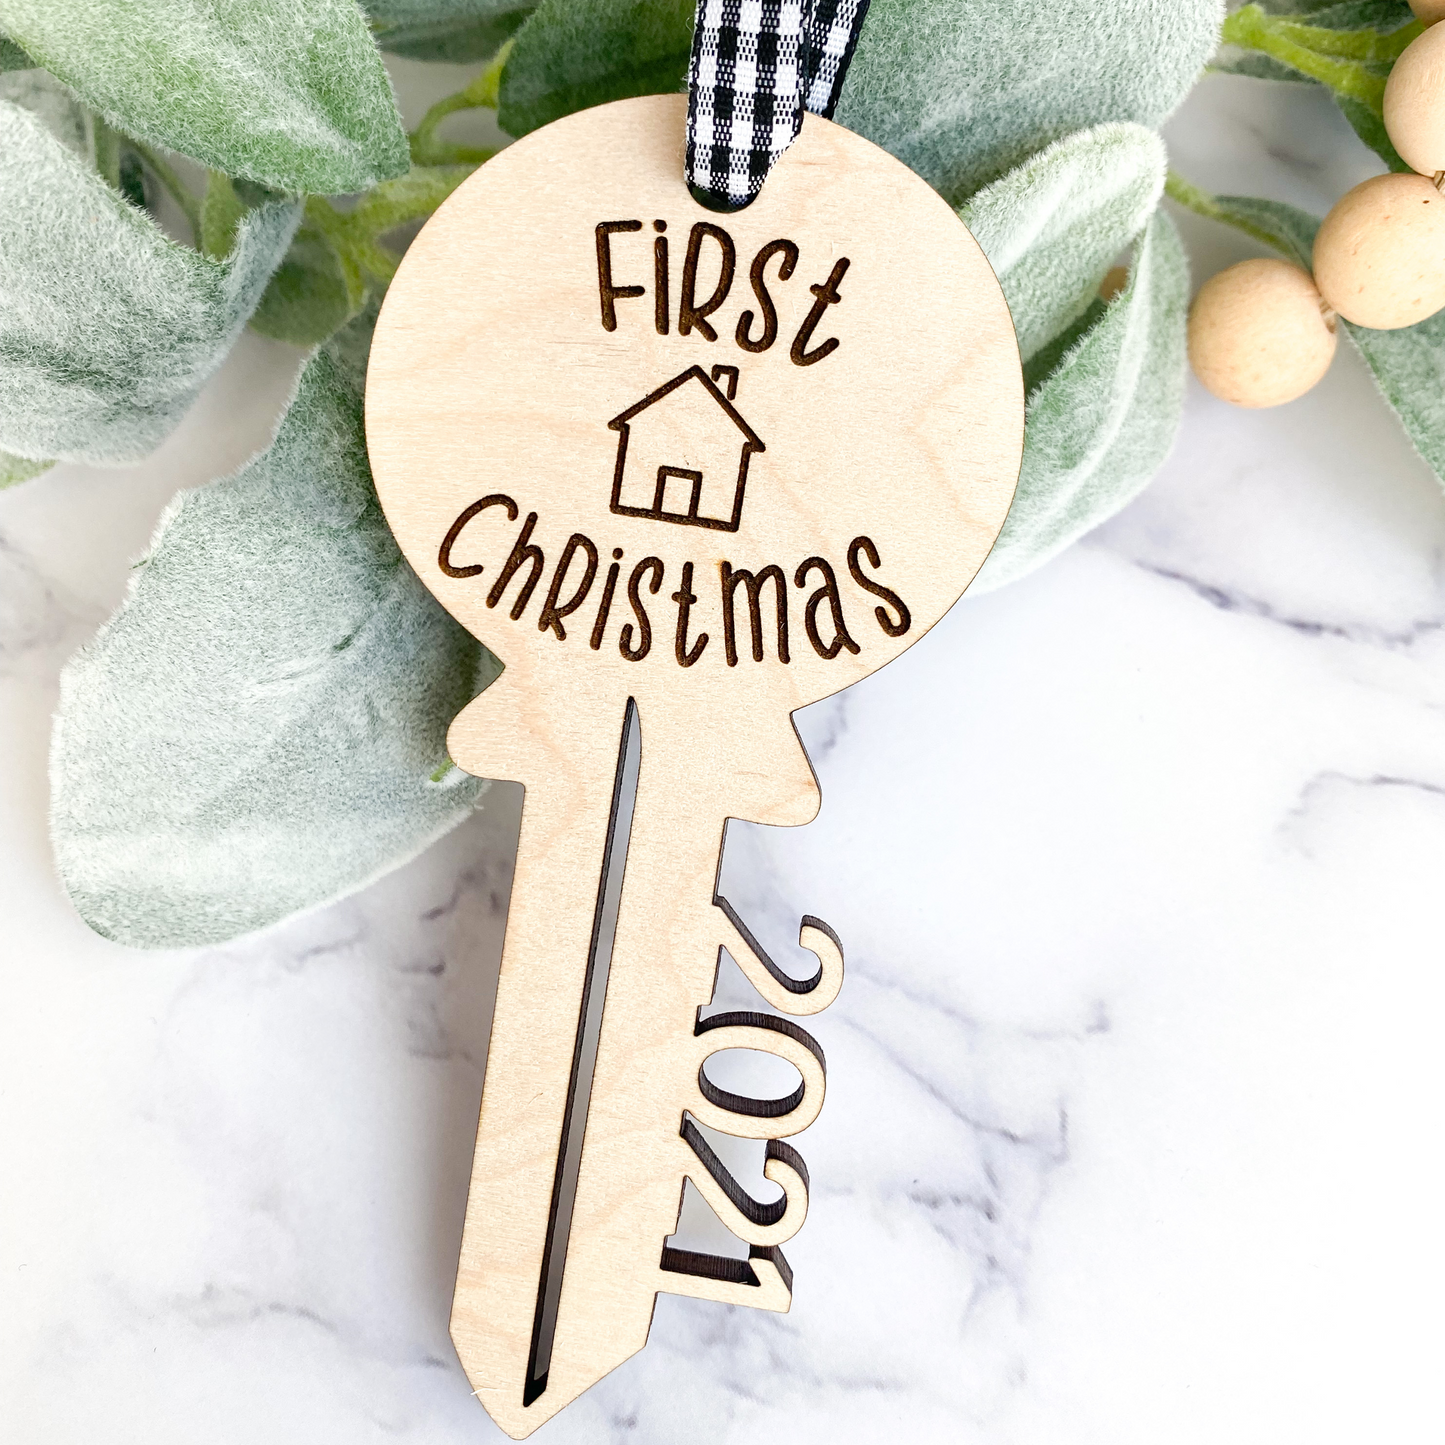 2021 First Christmas Key